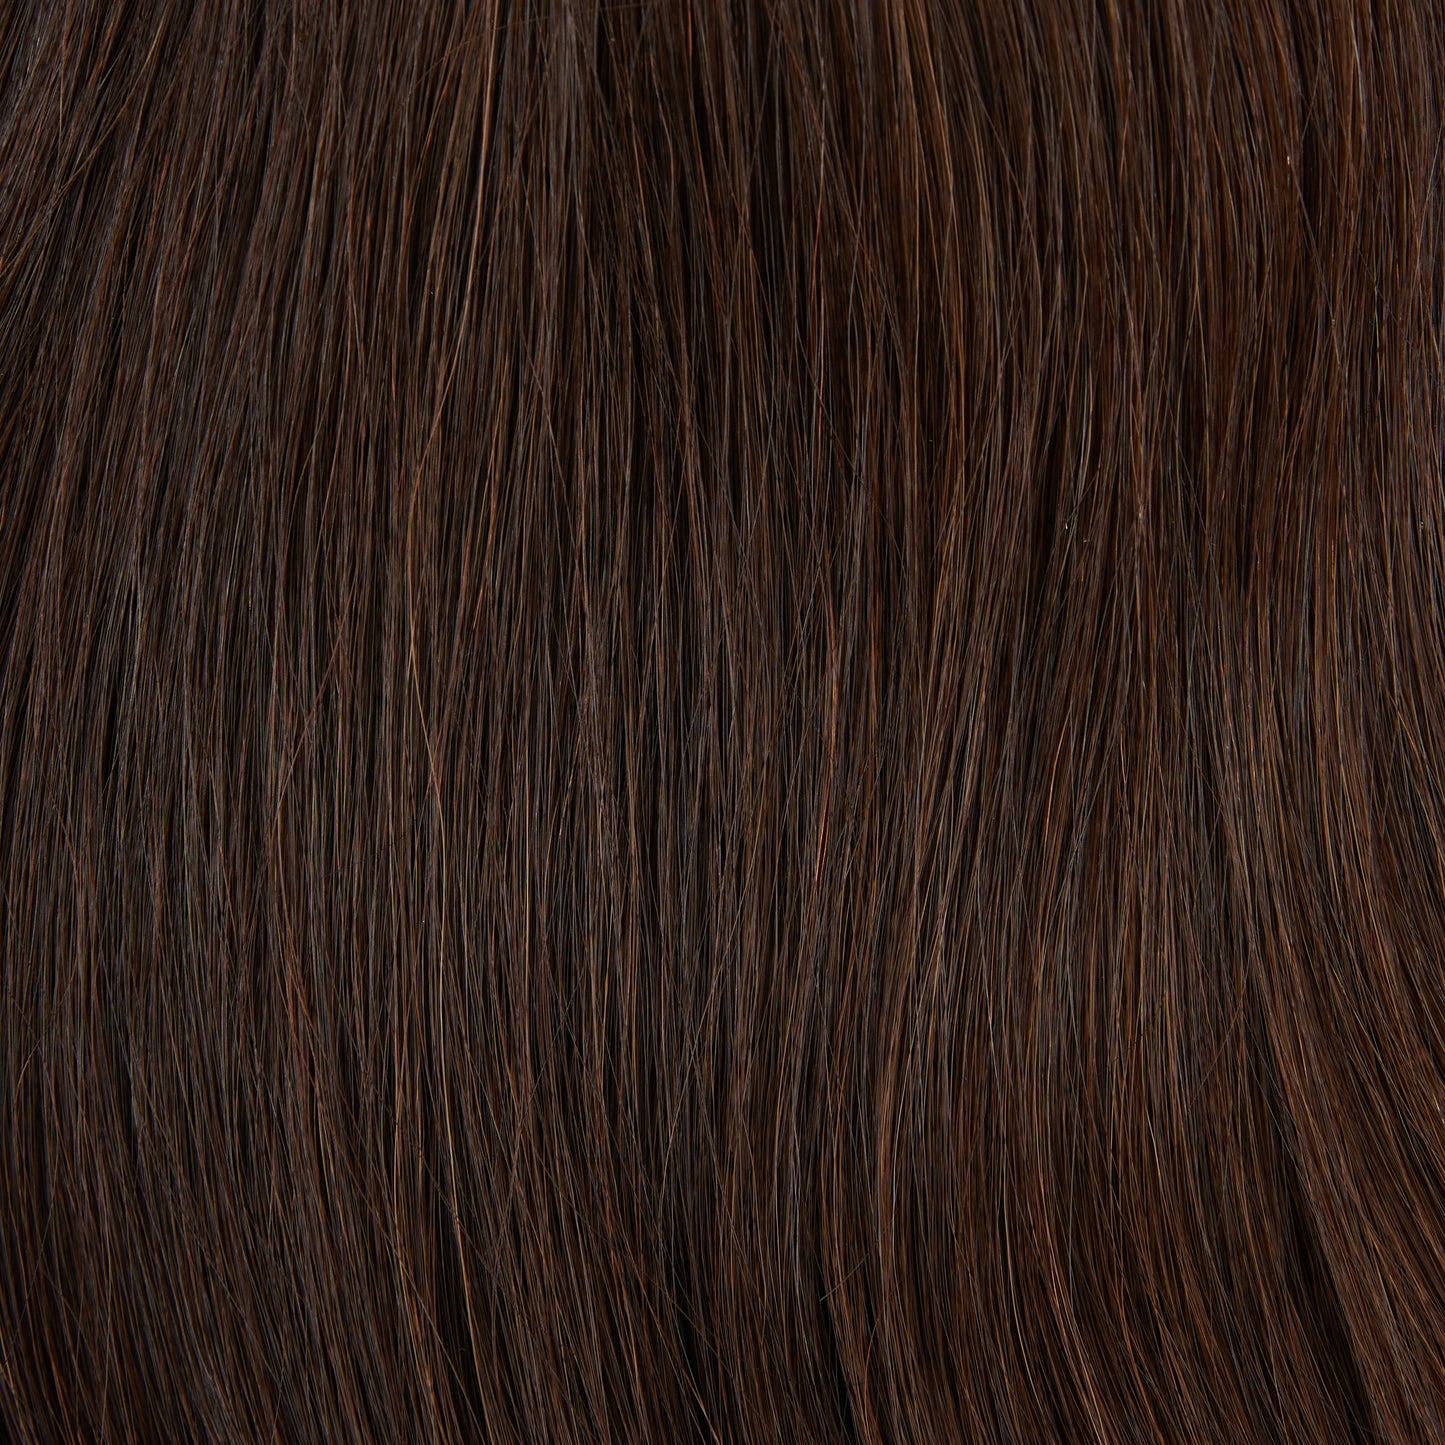 Dark Brown W/ Caramel Highlights #2-7 Hair Extension